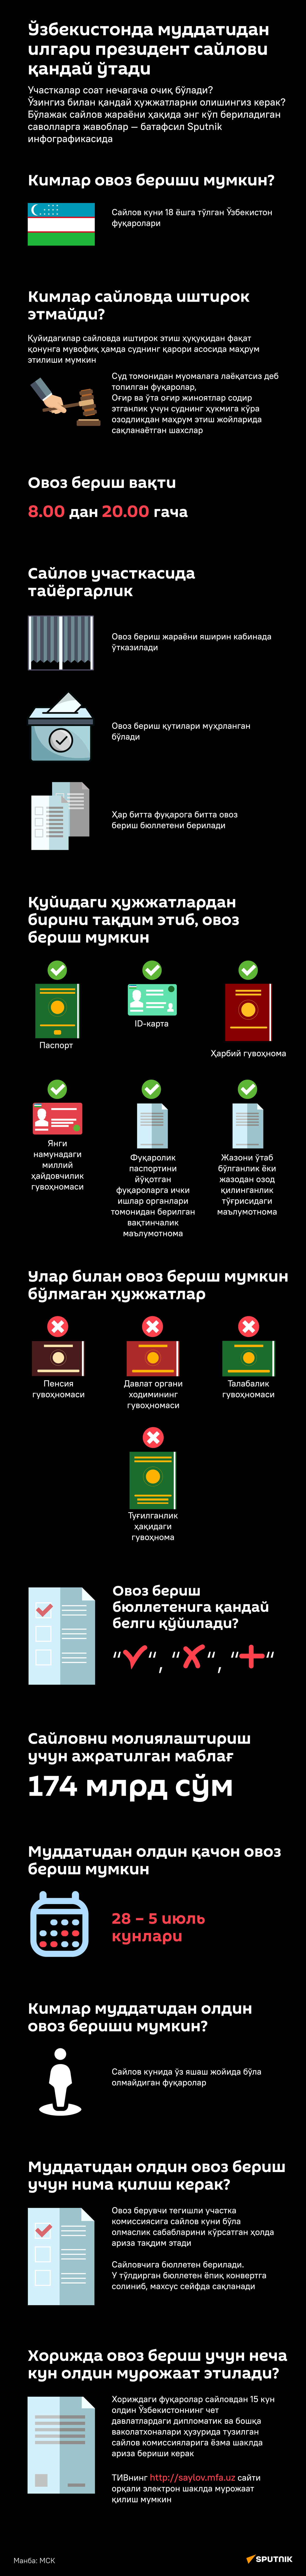 Kak budut proxodit dosrochnie prezidentskie vibori v Uzbekistane infografika uzb - Sputnik O‘zbekiston